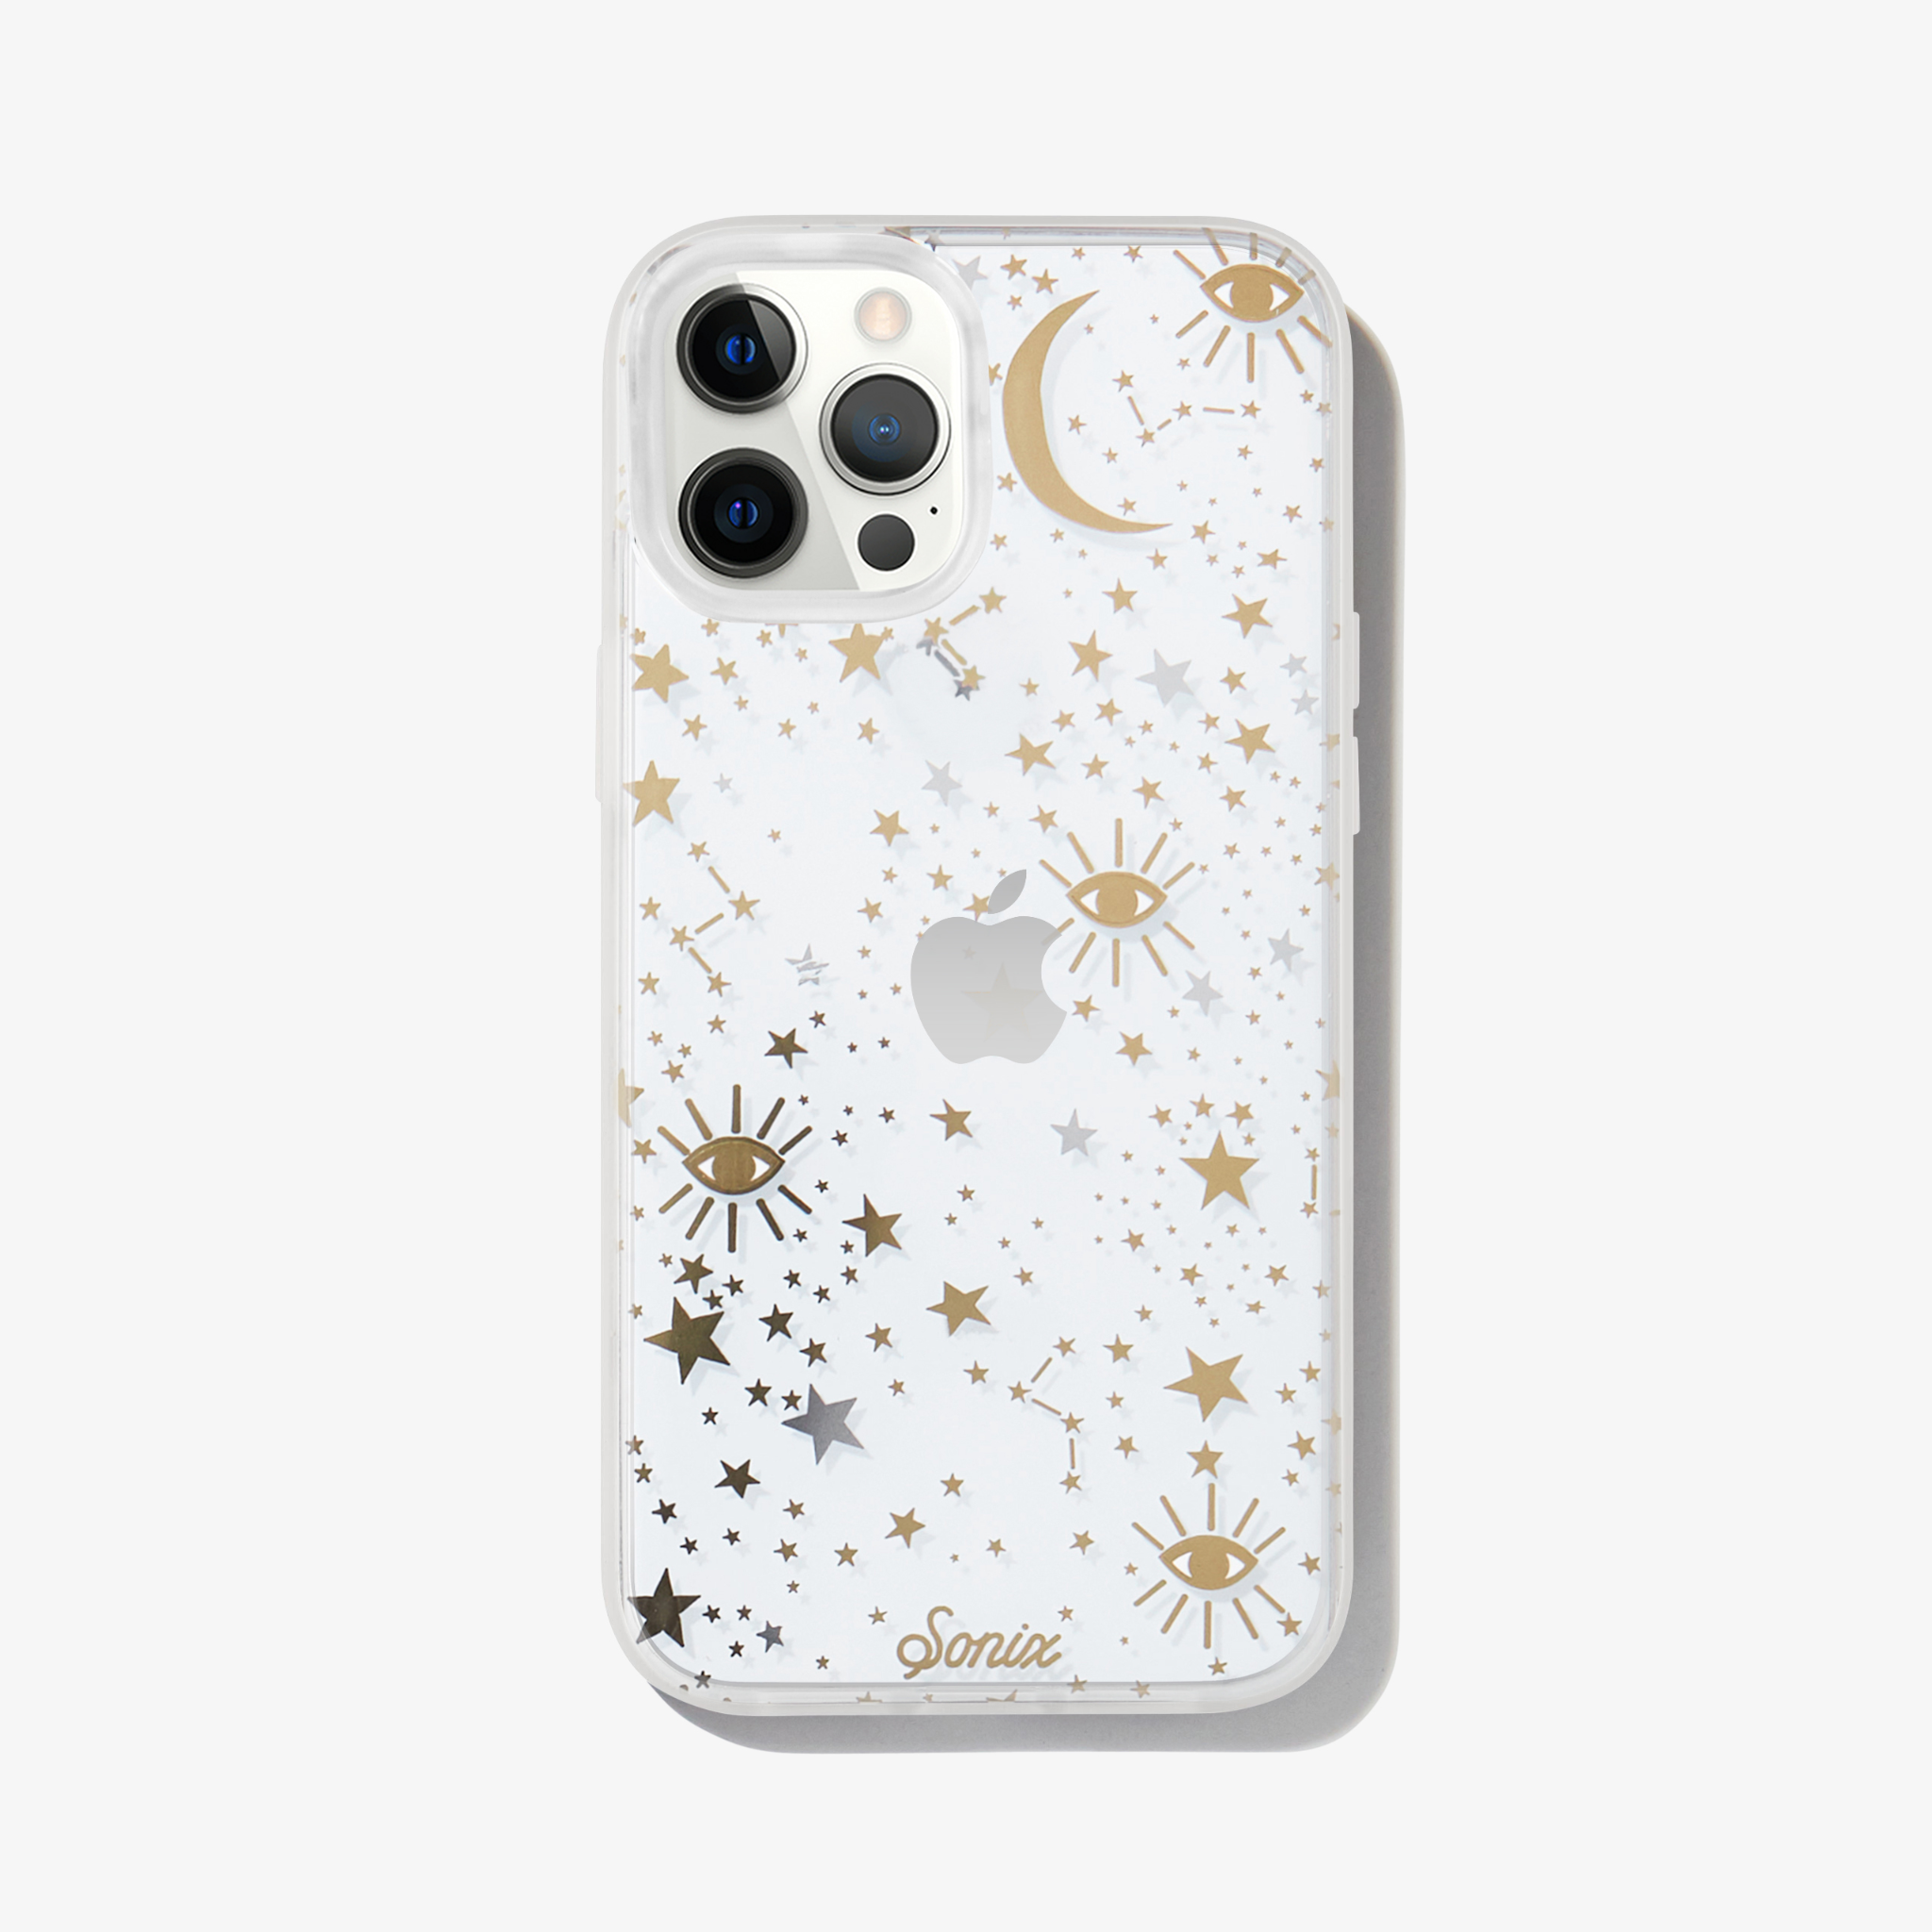 Cosmic iPhone Case